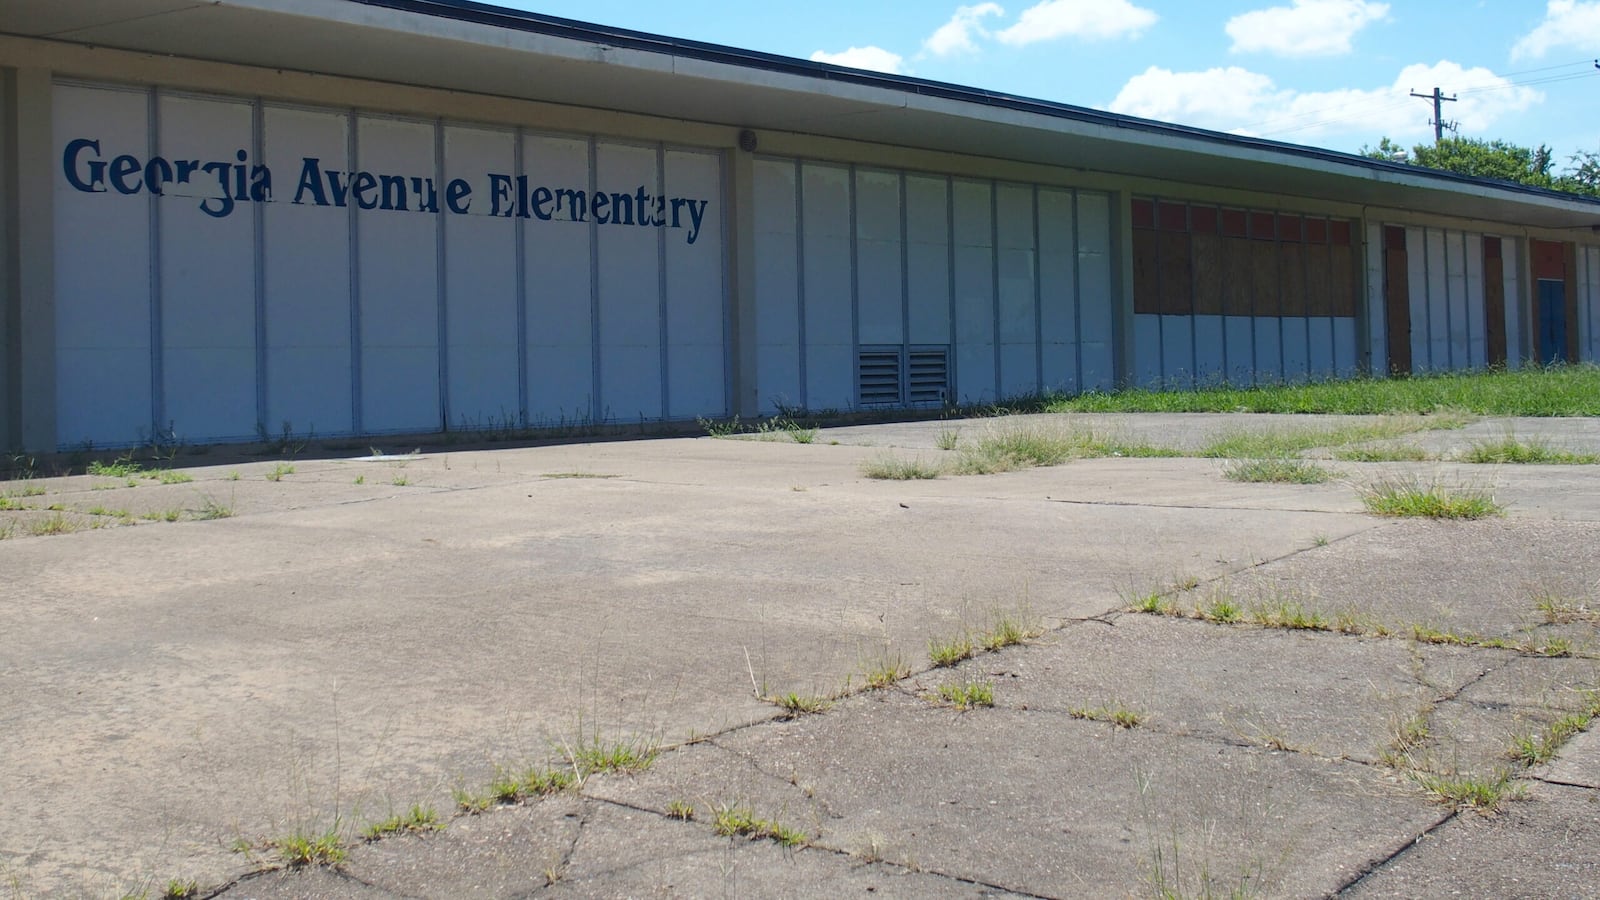 Georgia Avenue Elementary School closed in 2012, pictured here in 2019.